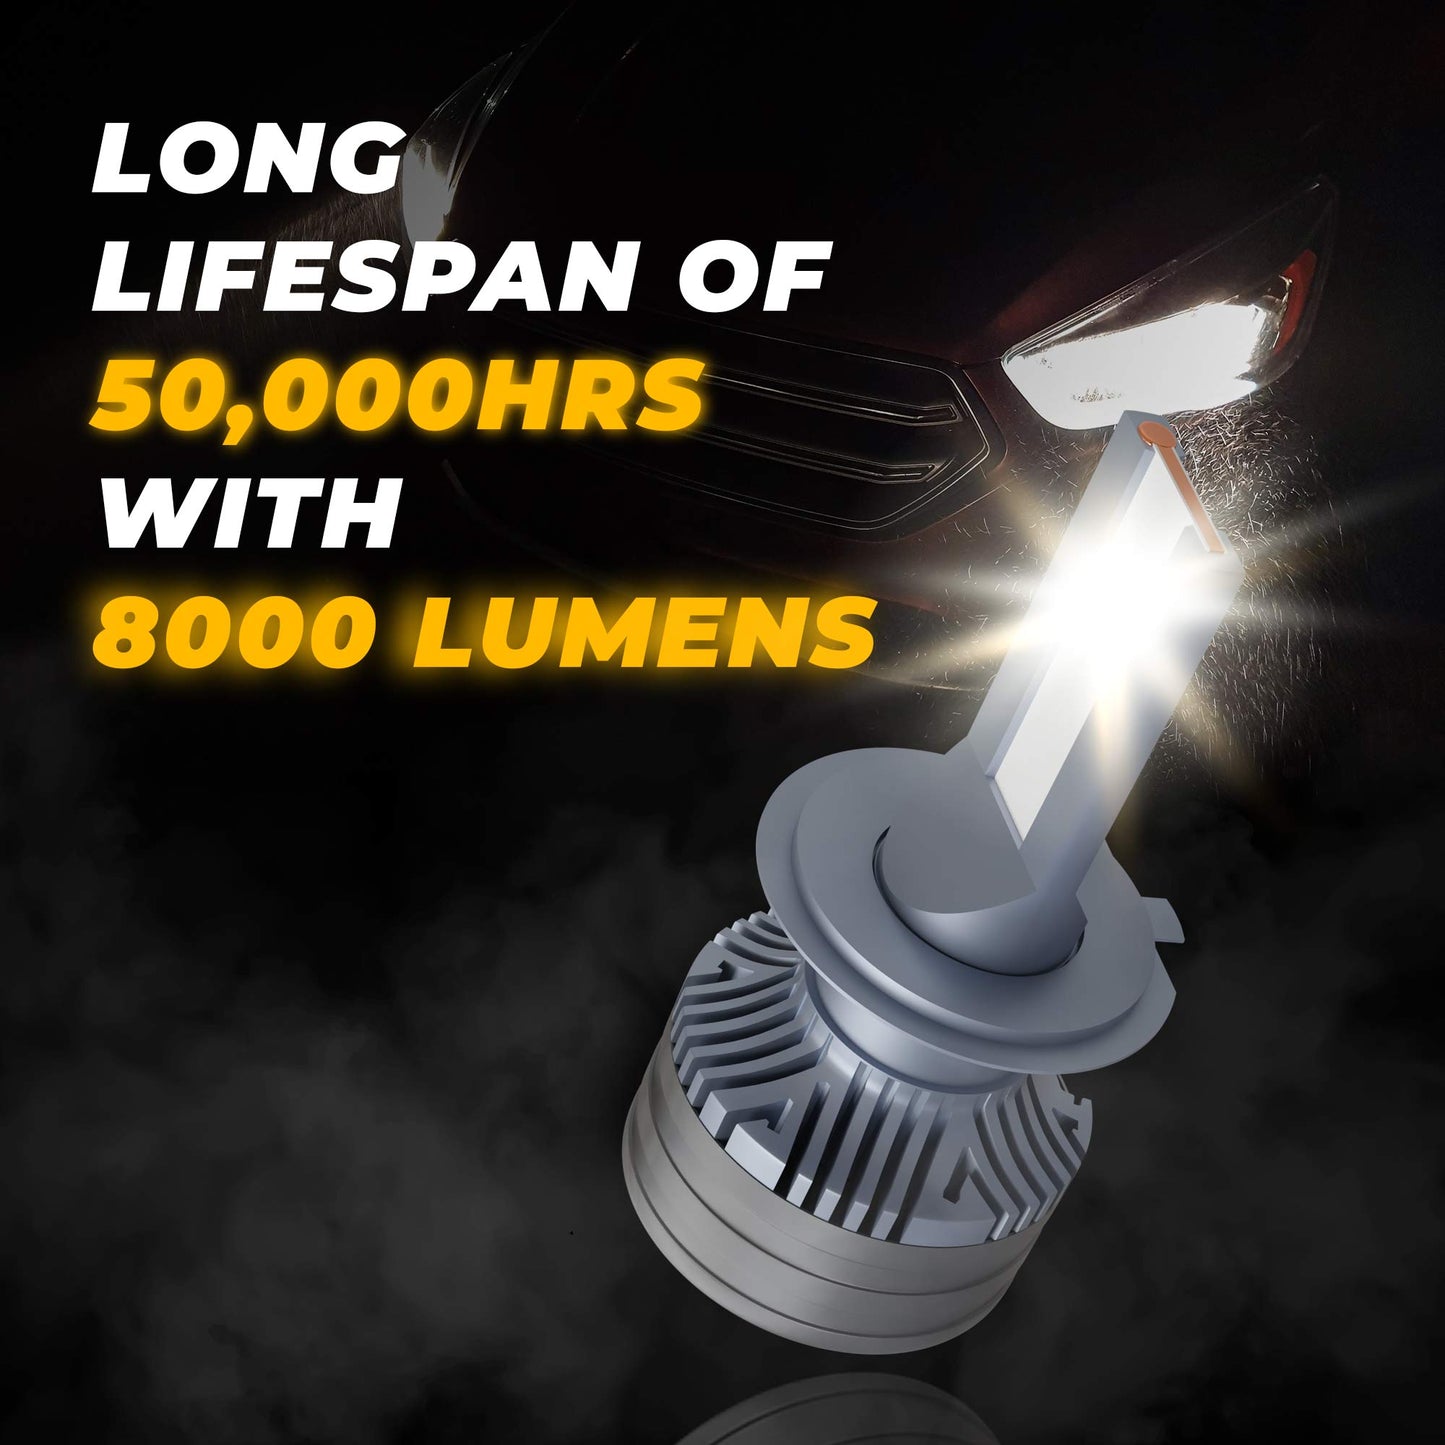 JCBL ACCESSORIES Lumenz H7 110W Car Headlight LED Bulb, 8000 Lumens Dual-Beam, 6000-6500K Day Light, Weather-Resistant IP67 Waterproof. | LONG LIFESPAN OF 50,000HRS 8000 LUMENS